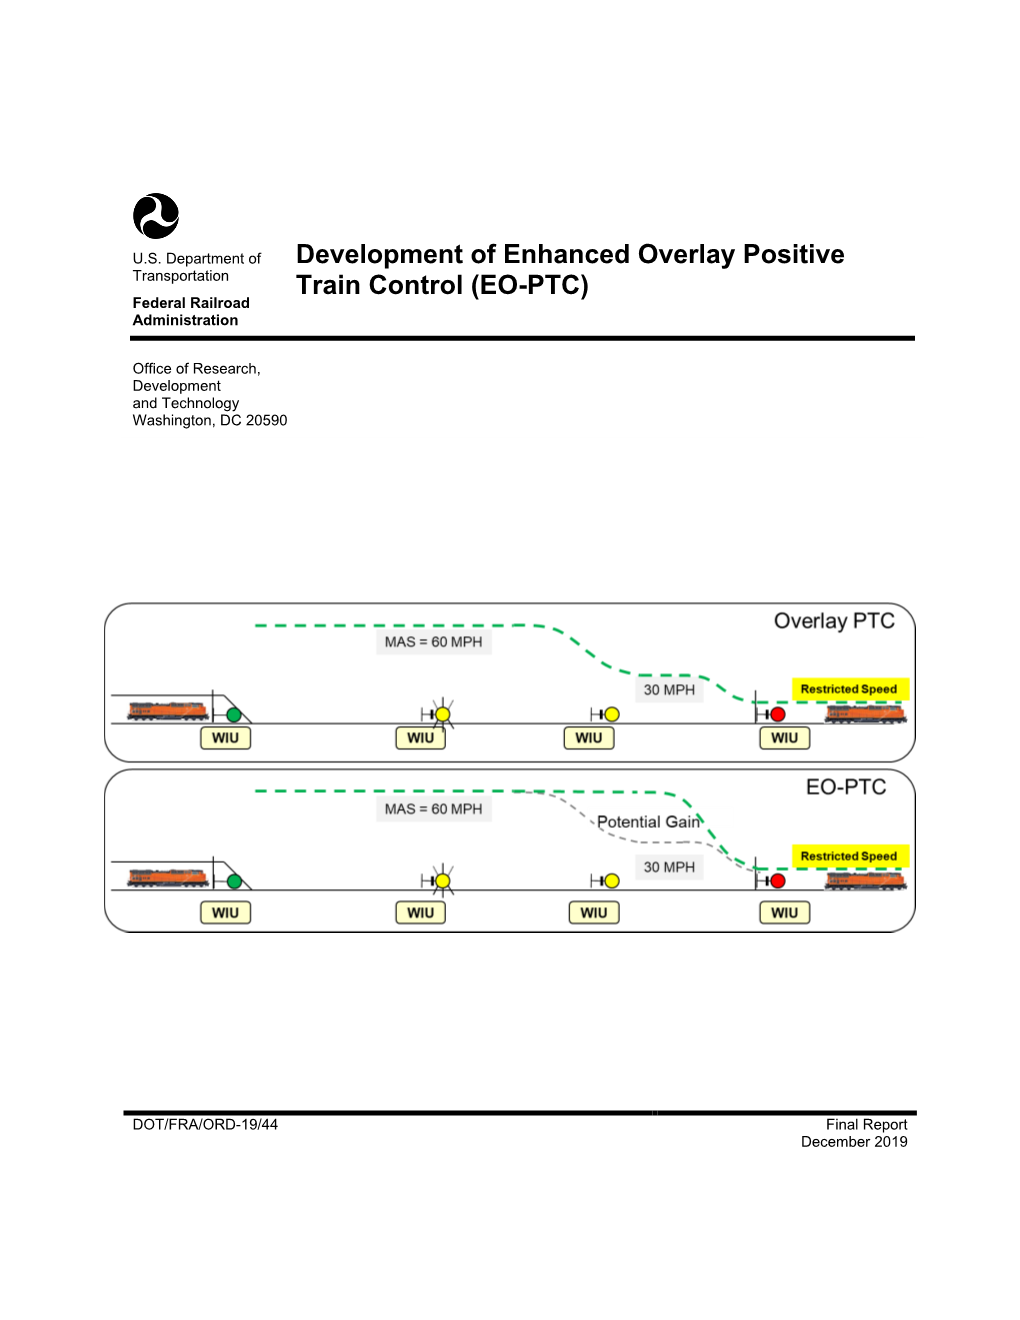 Development of Enhanced Overlay Positive Train Control (EO-PTC) DTFR53-1 I-D-00008 6